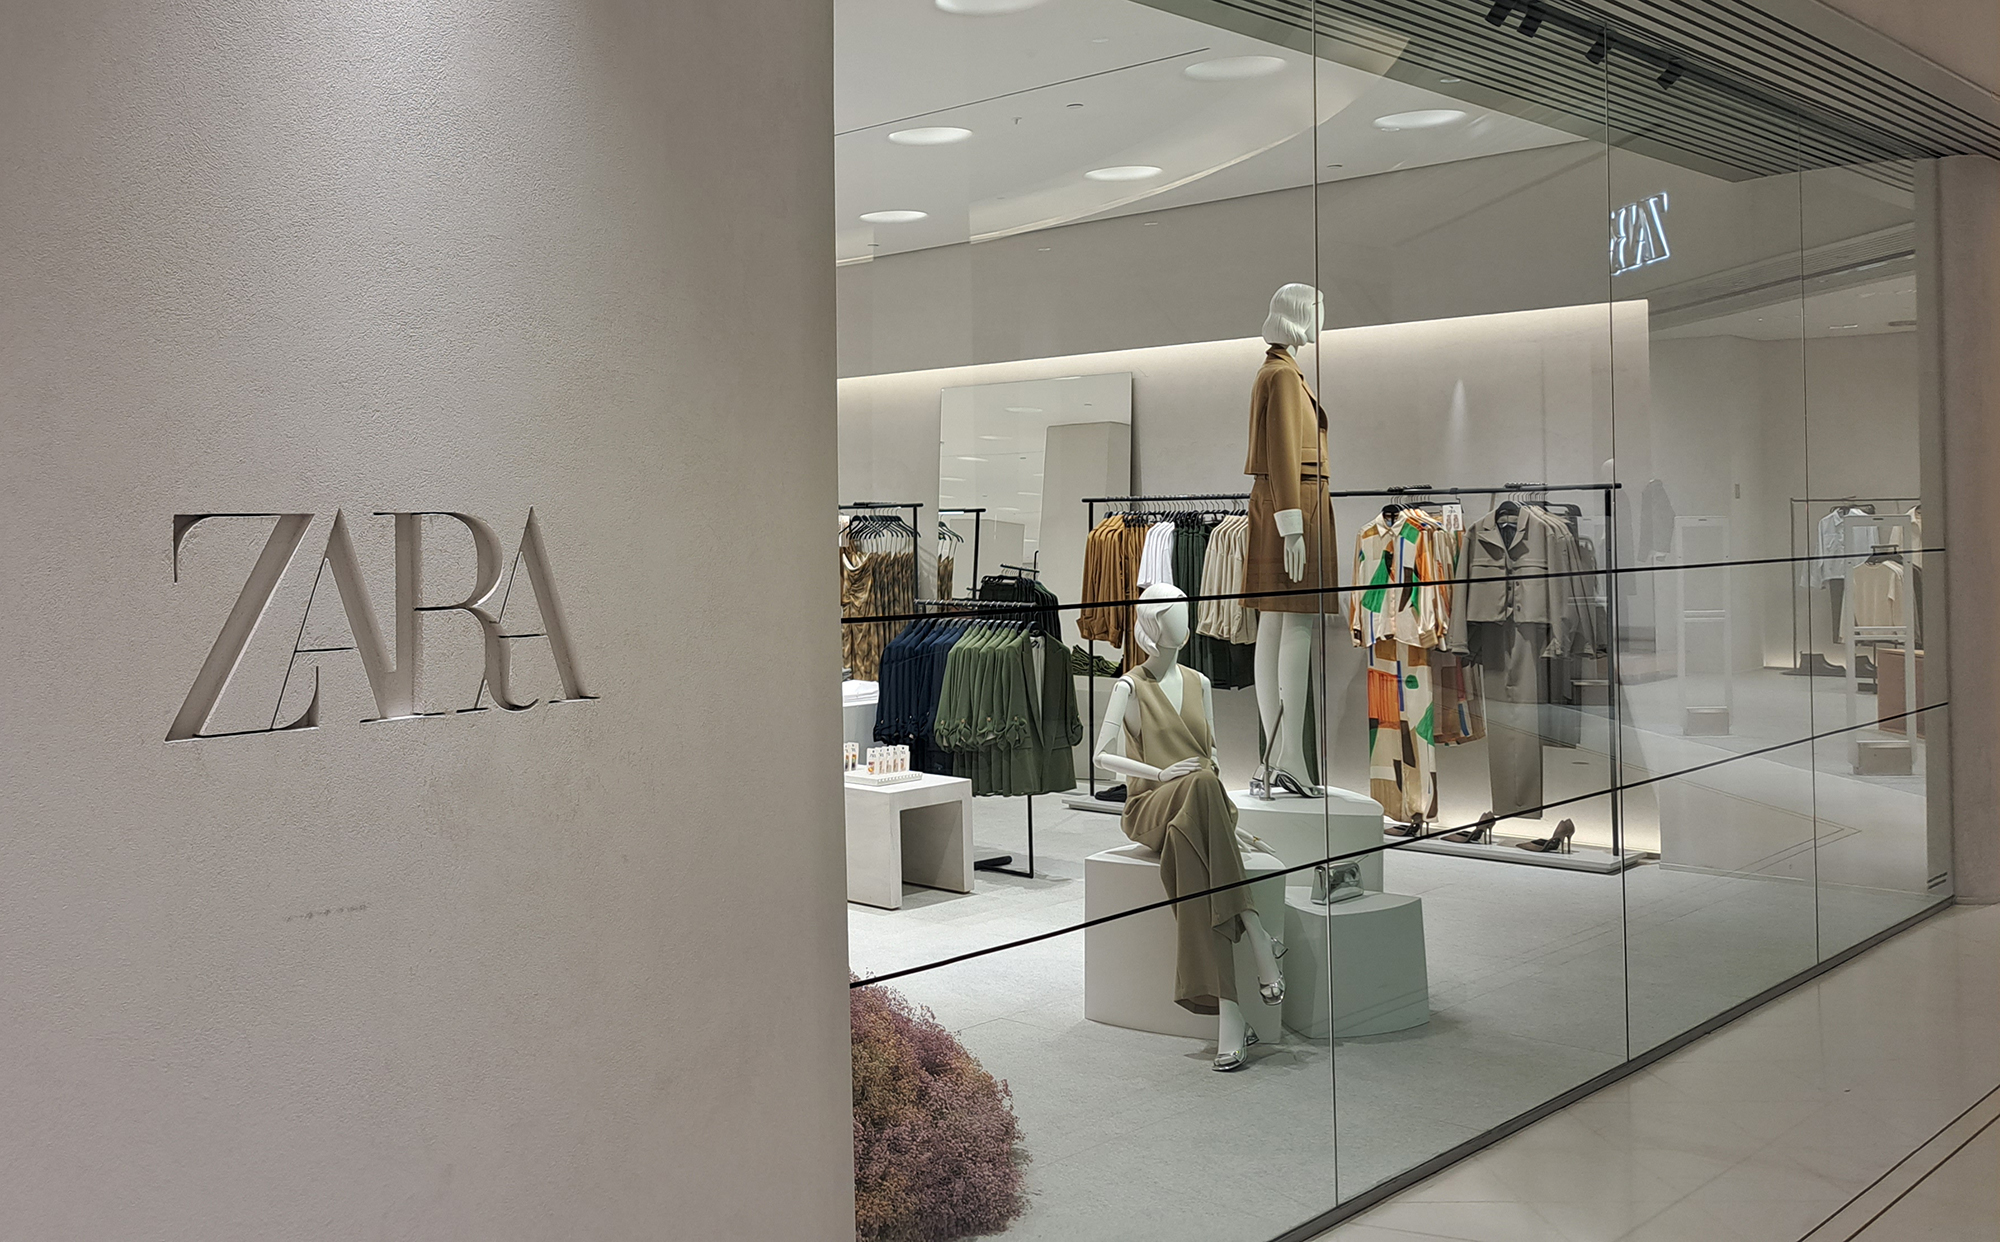 Varejista Zara fecha sete lojas no Brasil - Pequenas Empresas